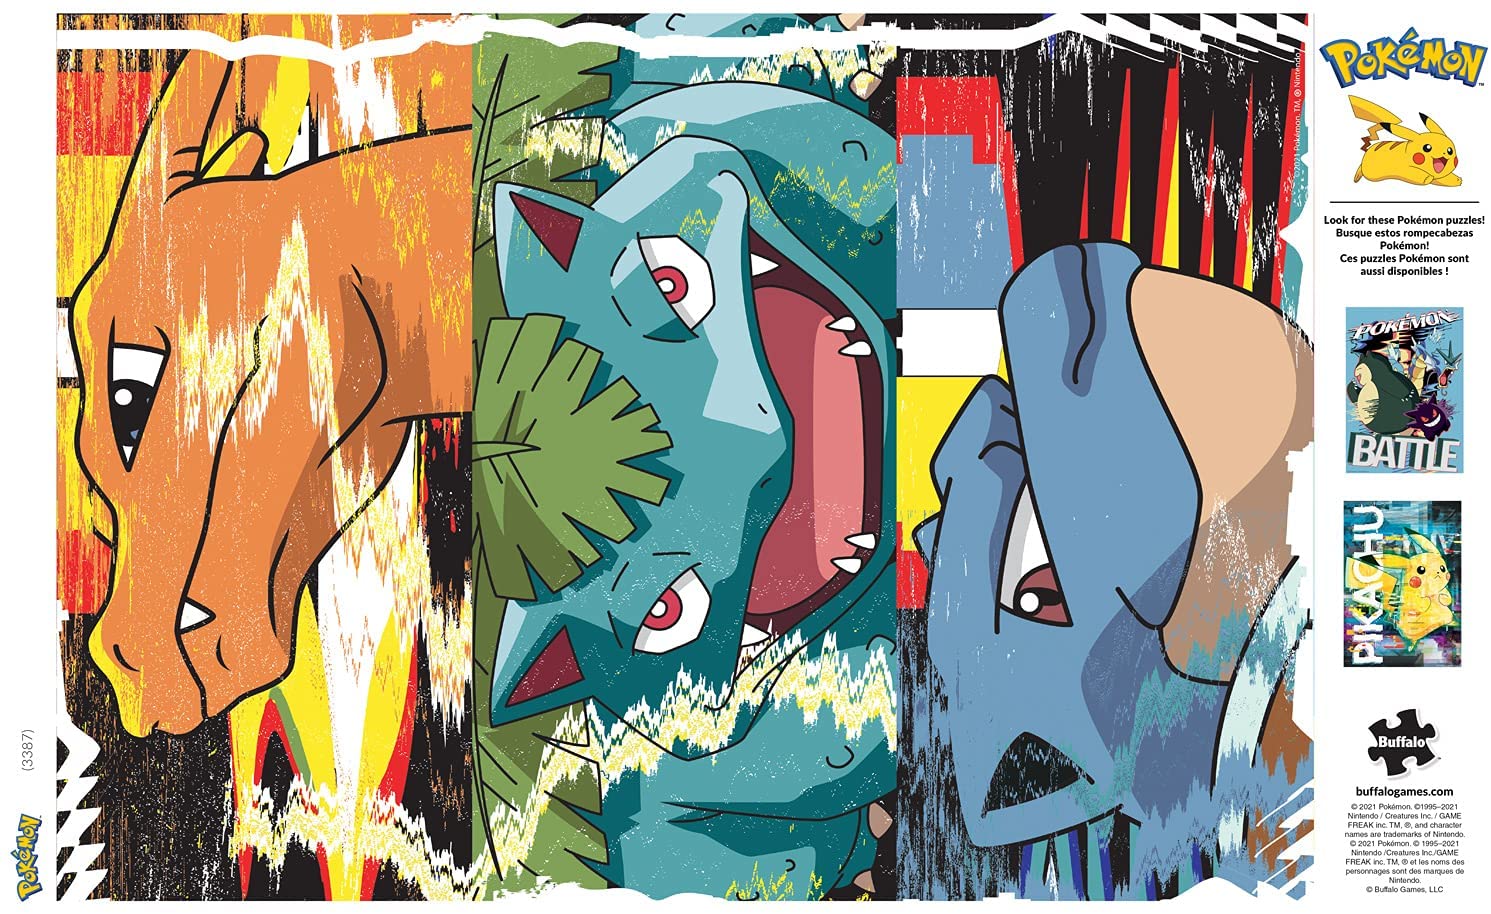 Pokémon: Blastoise, Charizard, and Venusaur Graffiti 400 Piece Puzzle